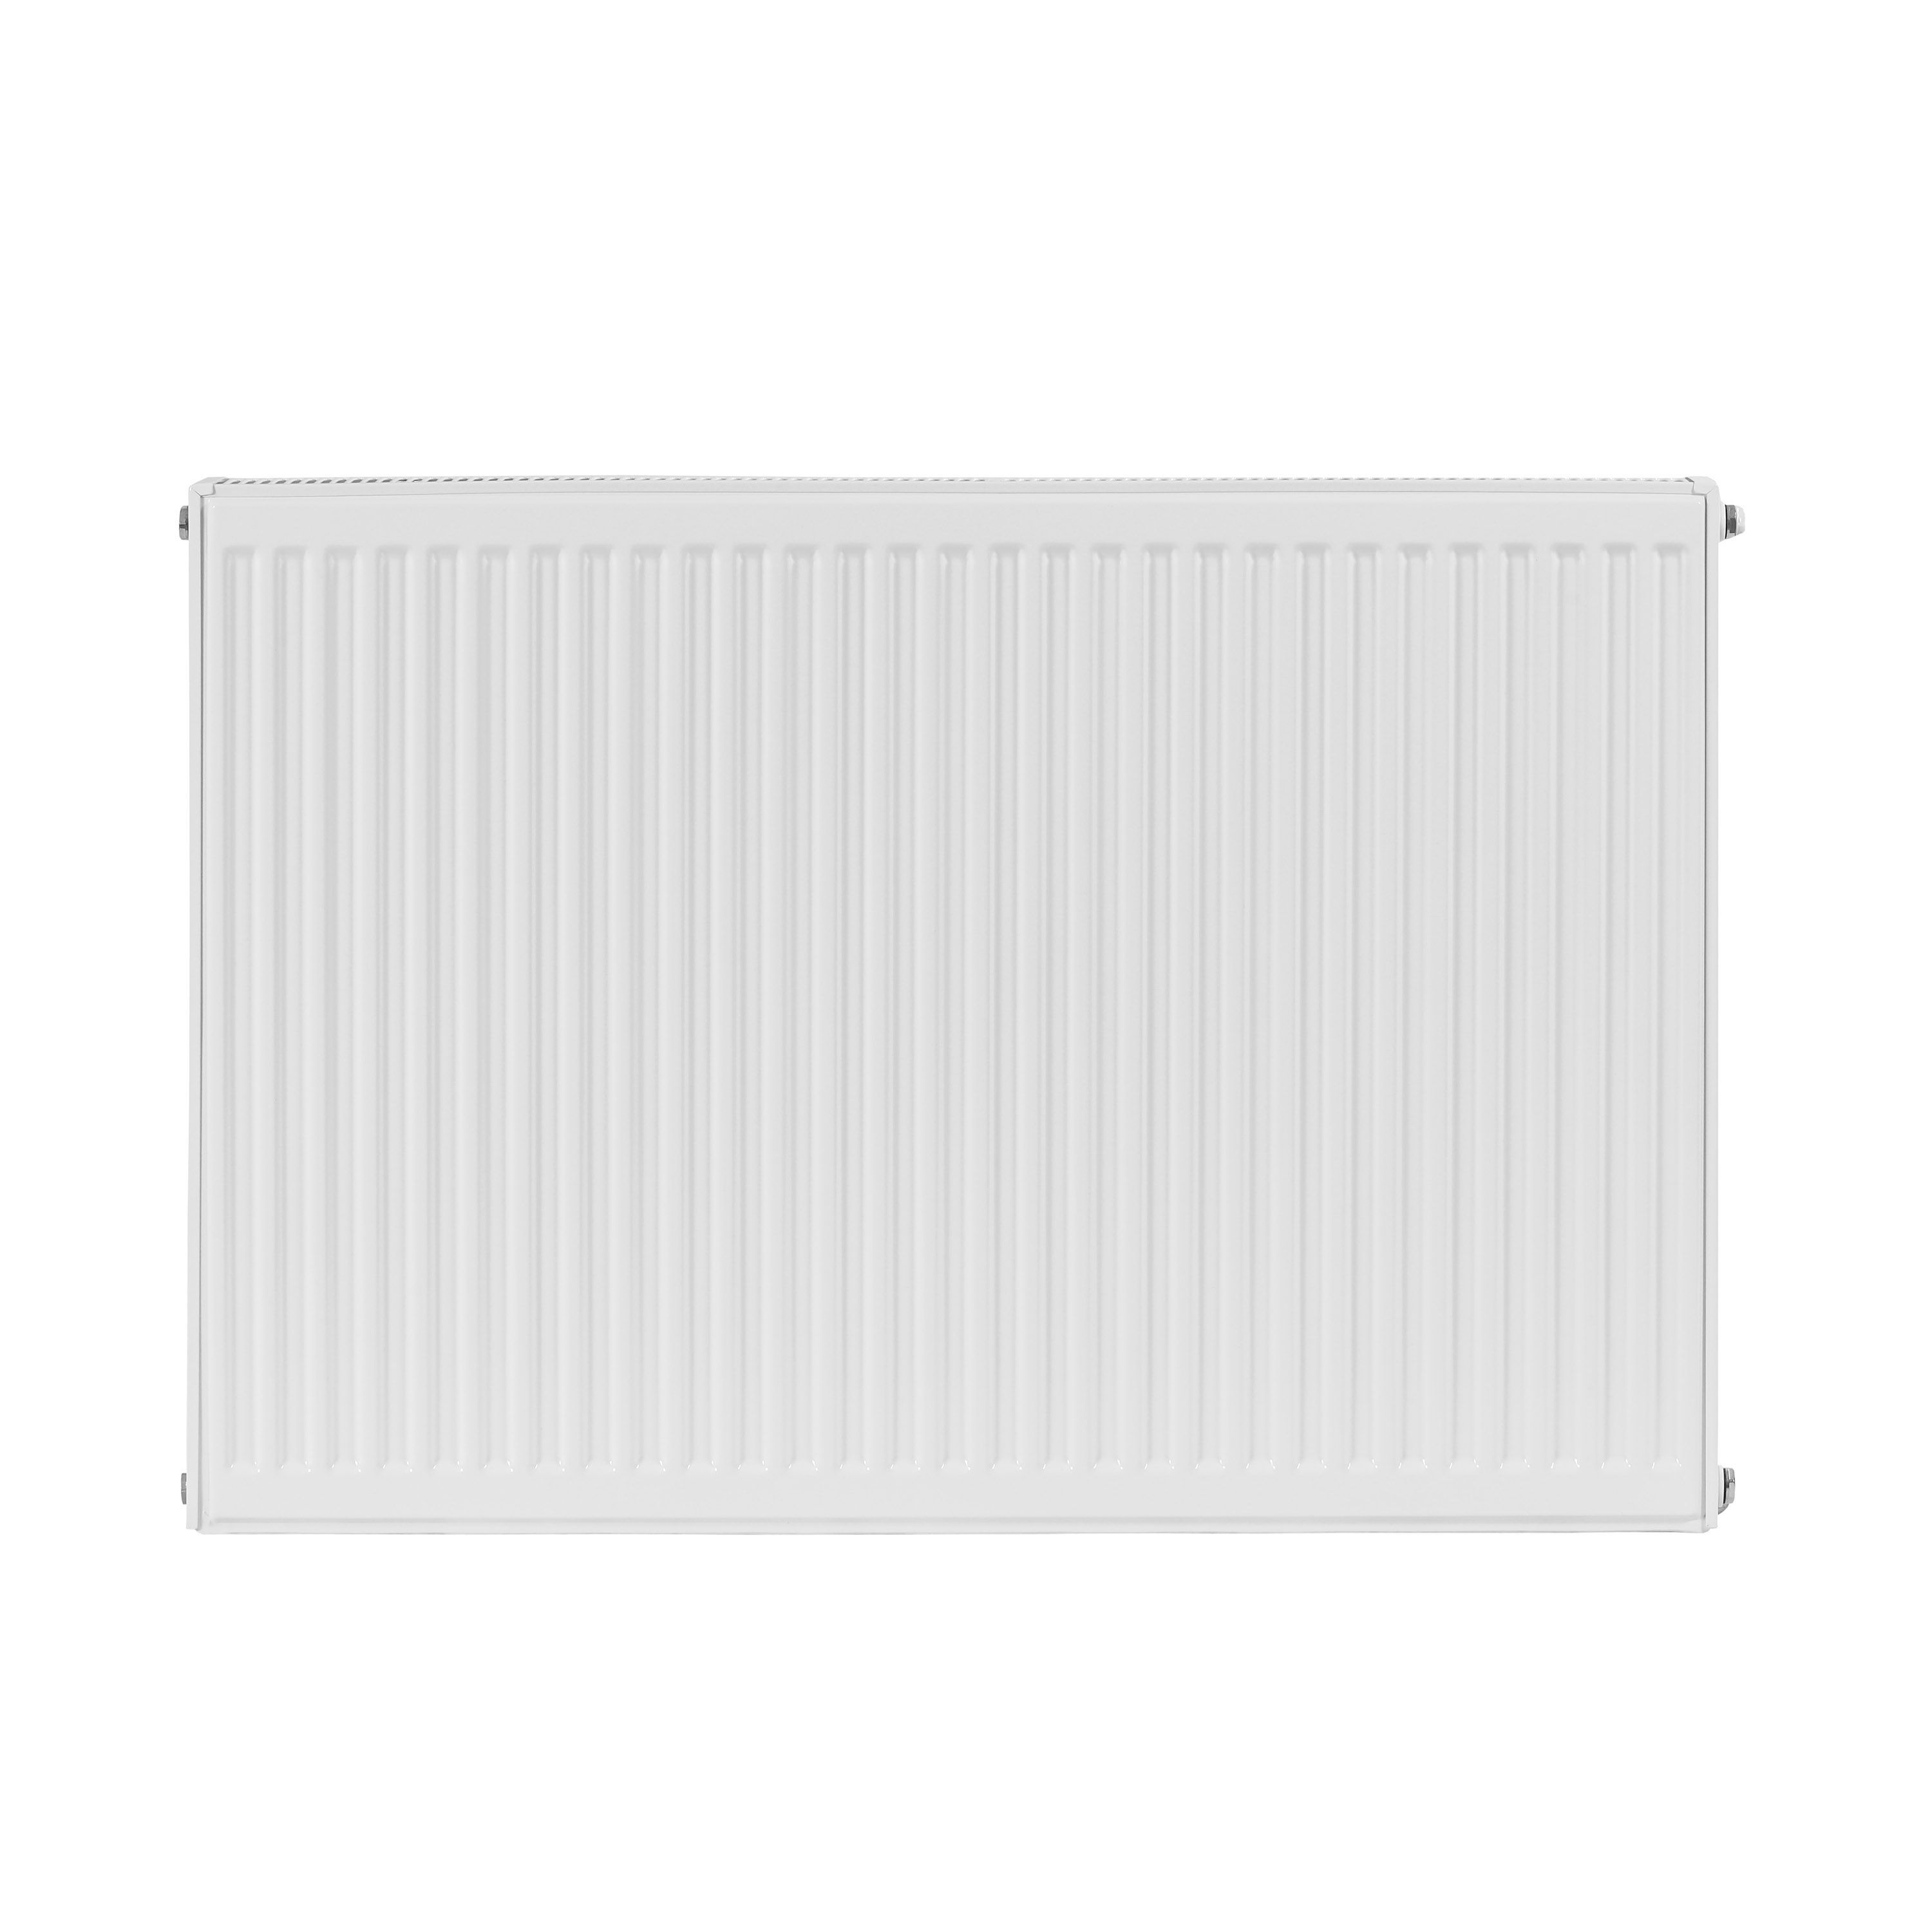 Flomasta White Type 11 Single Panel Radiator, (W)900mm x (H)700mm